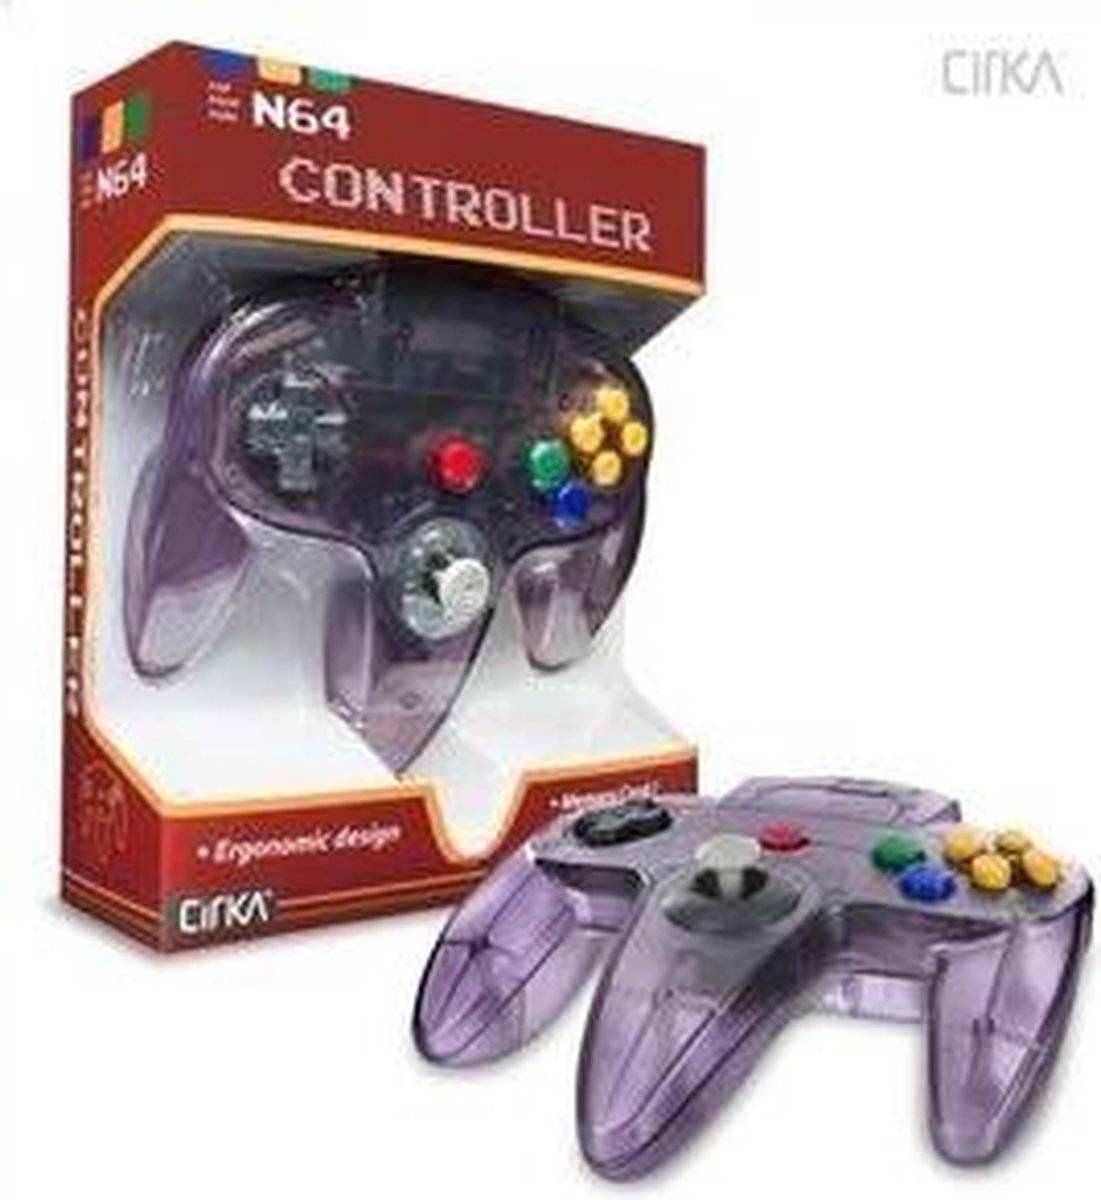 Cirka Nintendo 64 (N64) Controller - Atomic Purple - Cirka